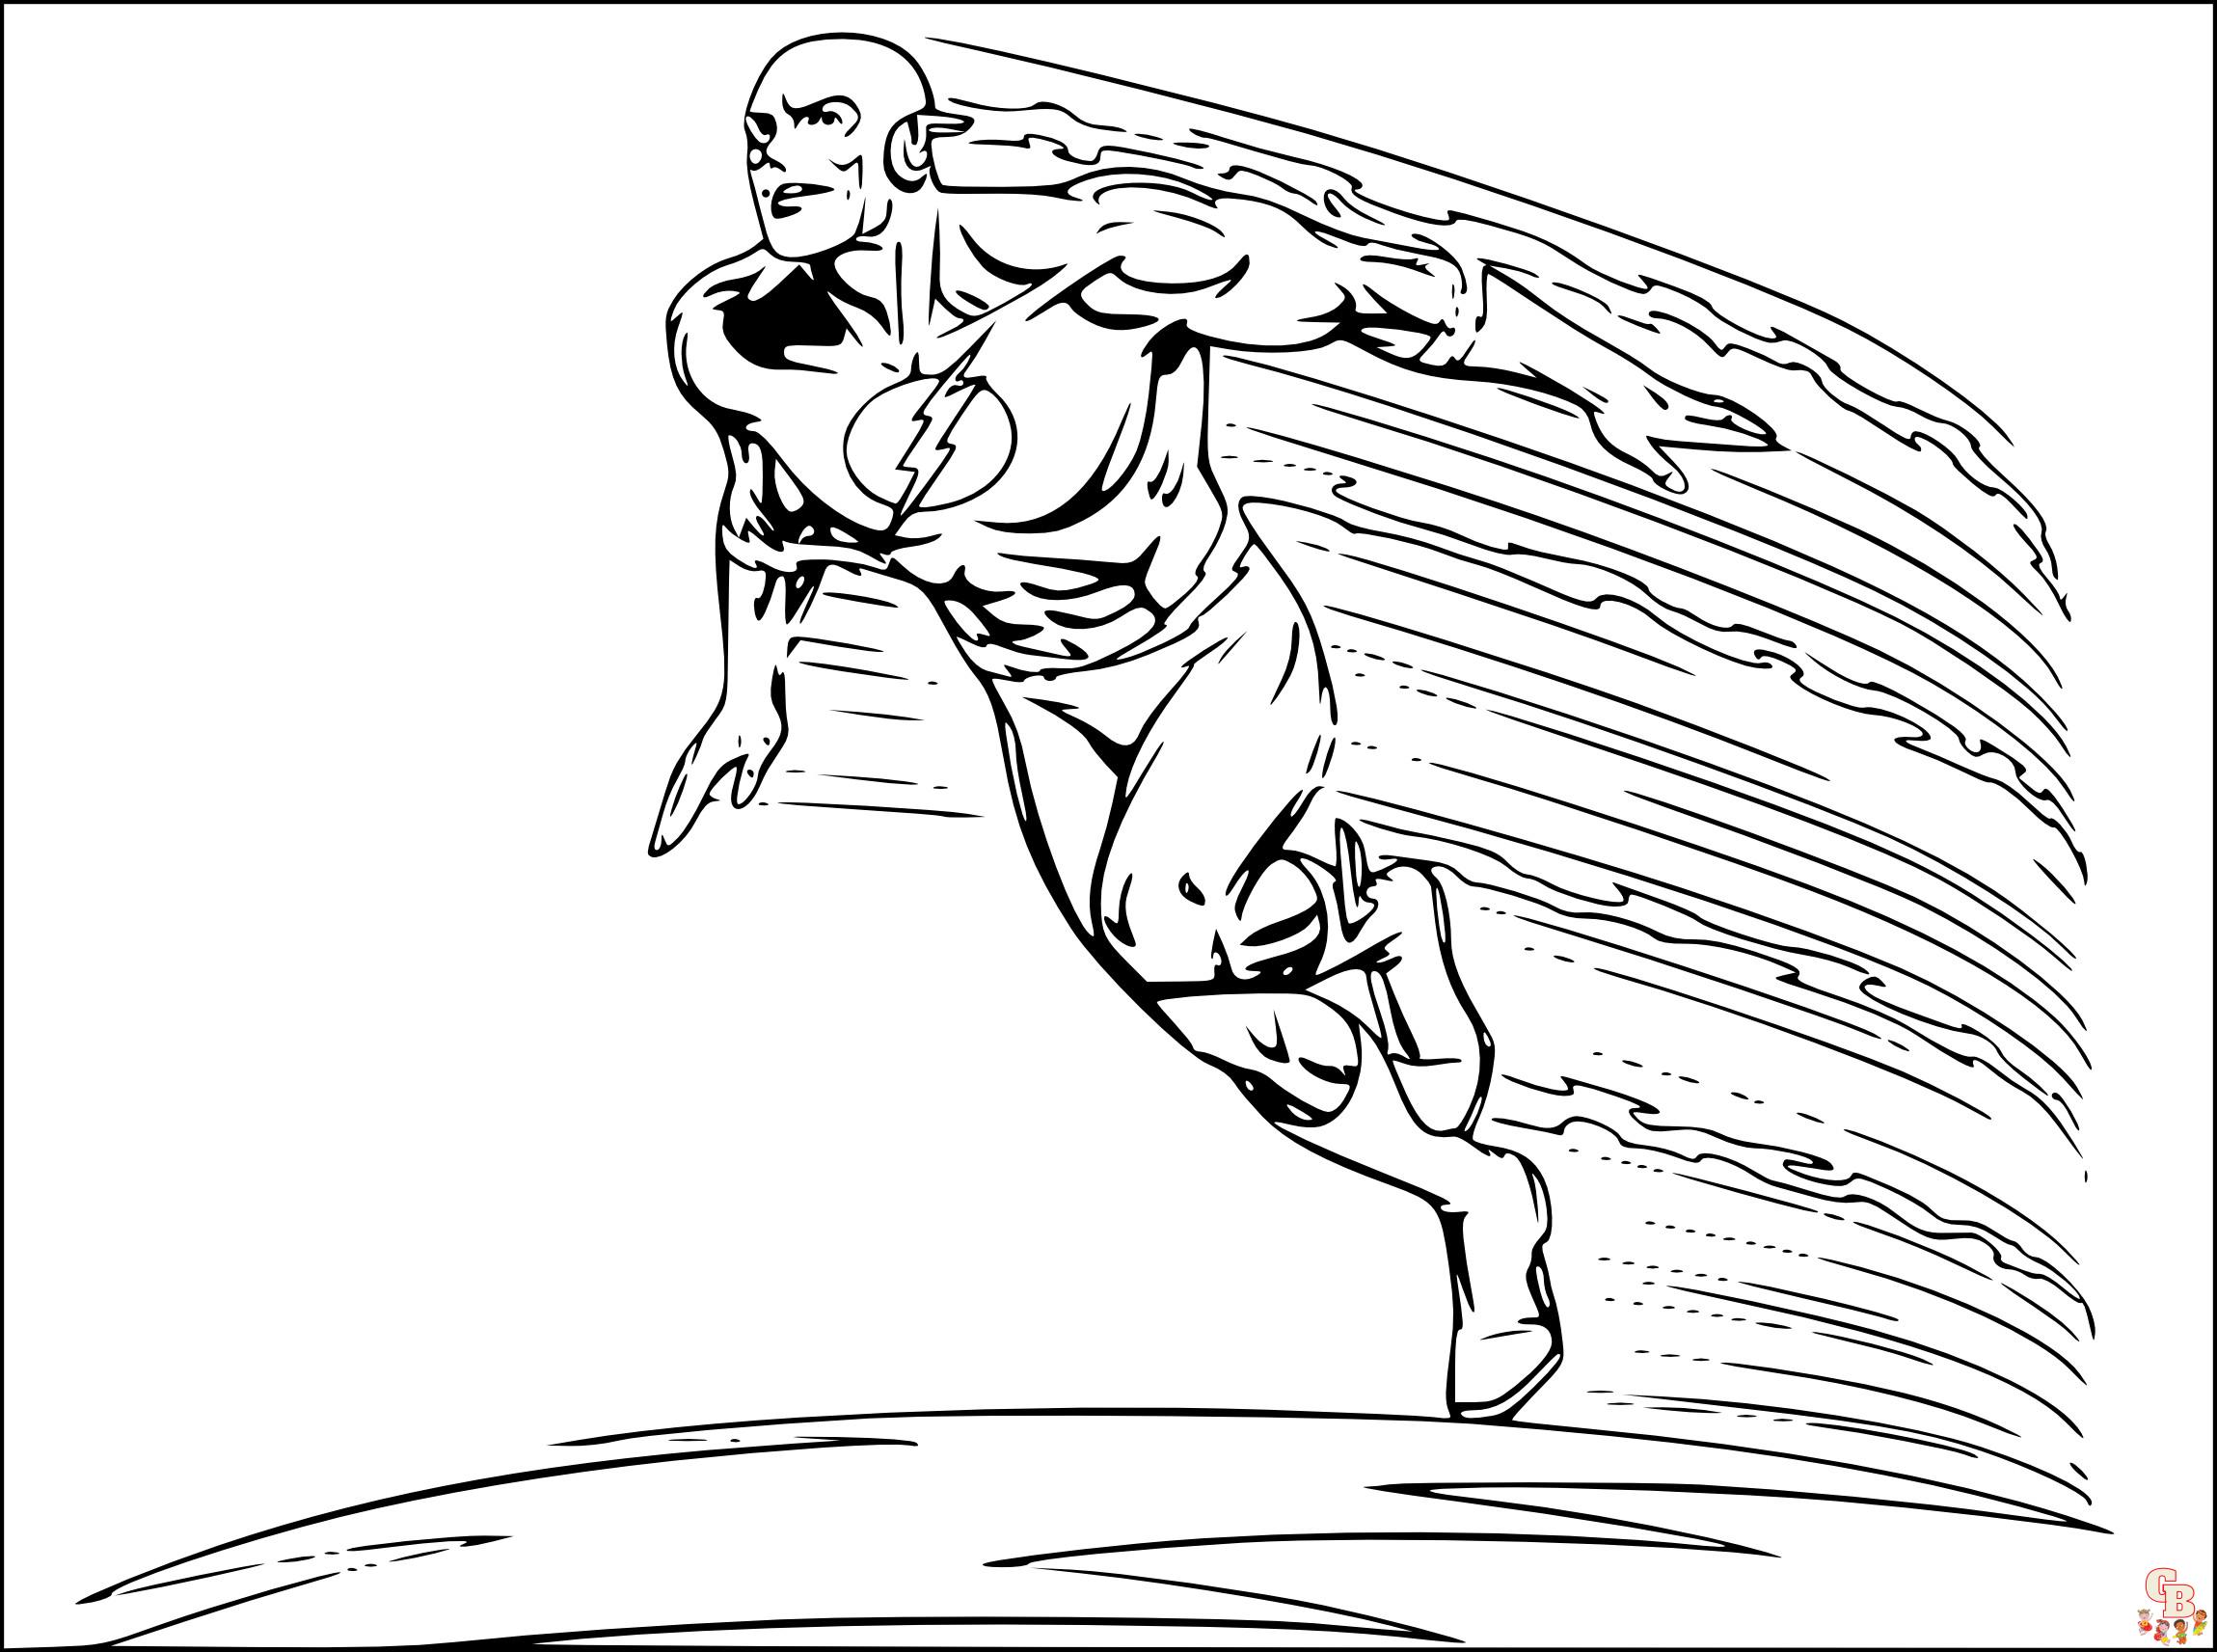 Coloring Flash Super Heroes